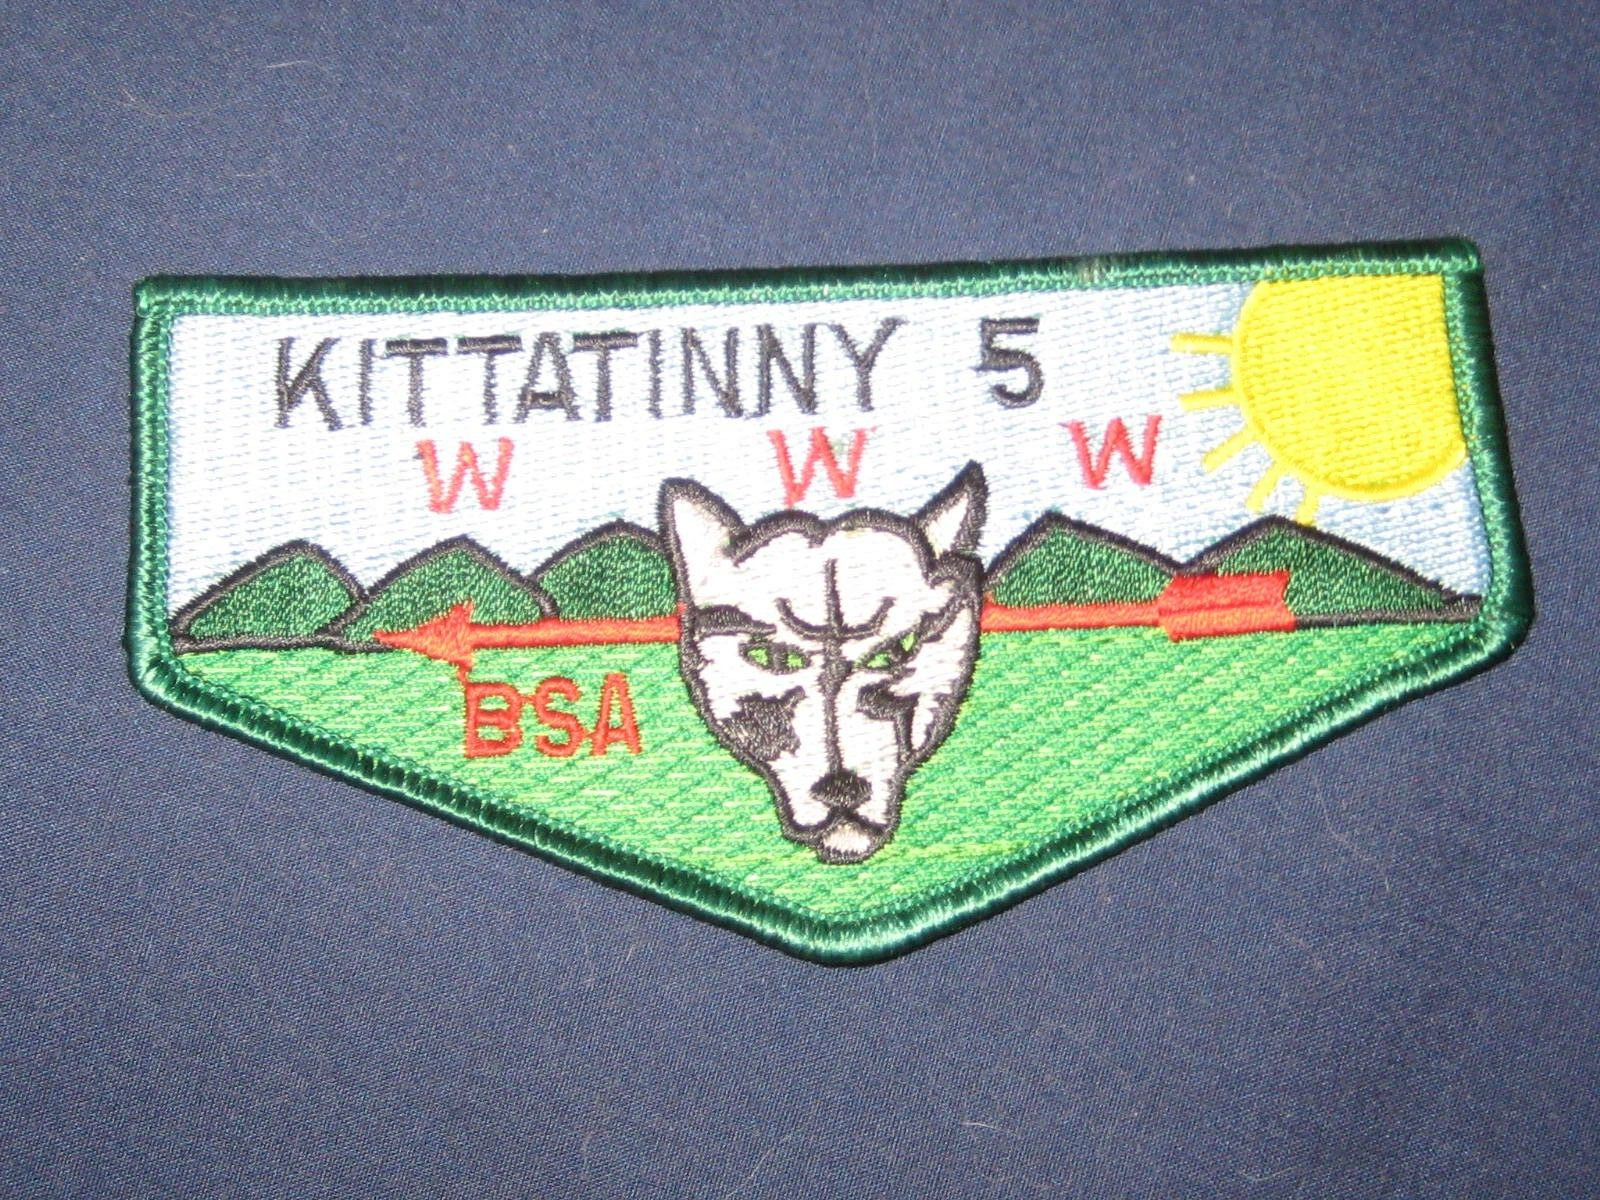 Kittatinny 5 s9 flap  JFO